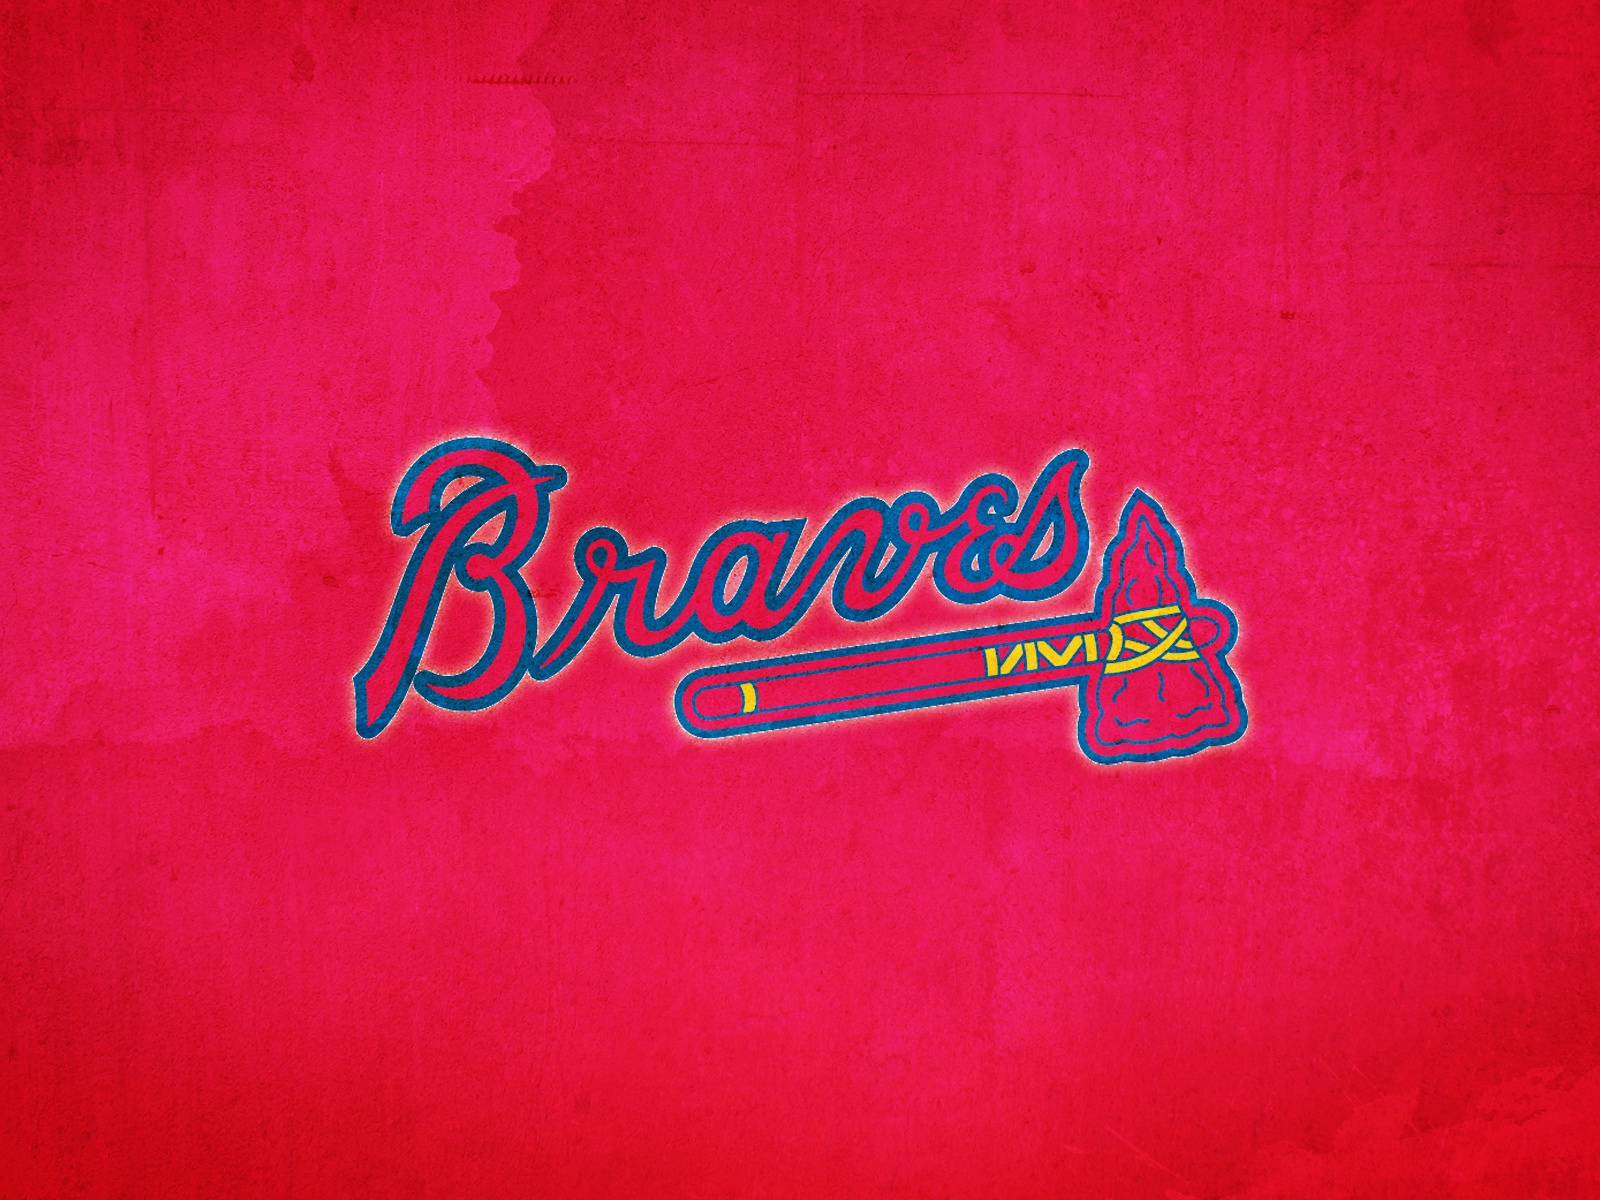 Atlanta Braves Baseball Mlb Fk Wallpapers Hd Desktop And Mobile Backgrounds